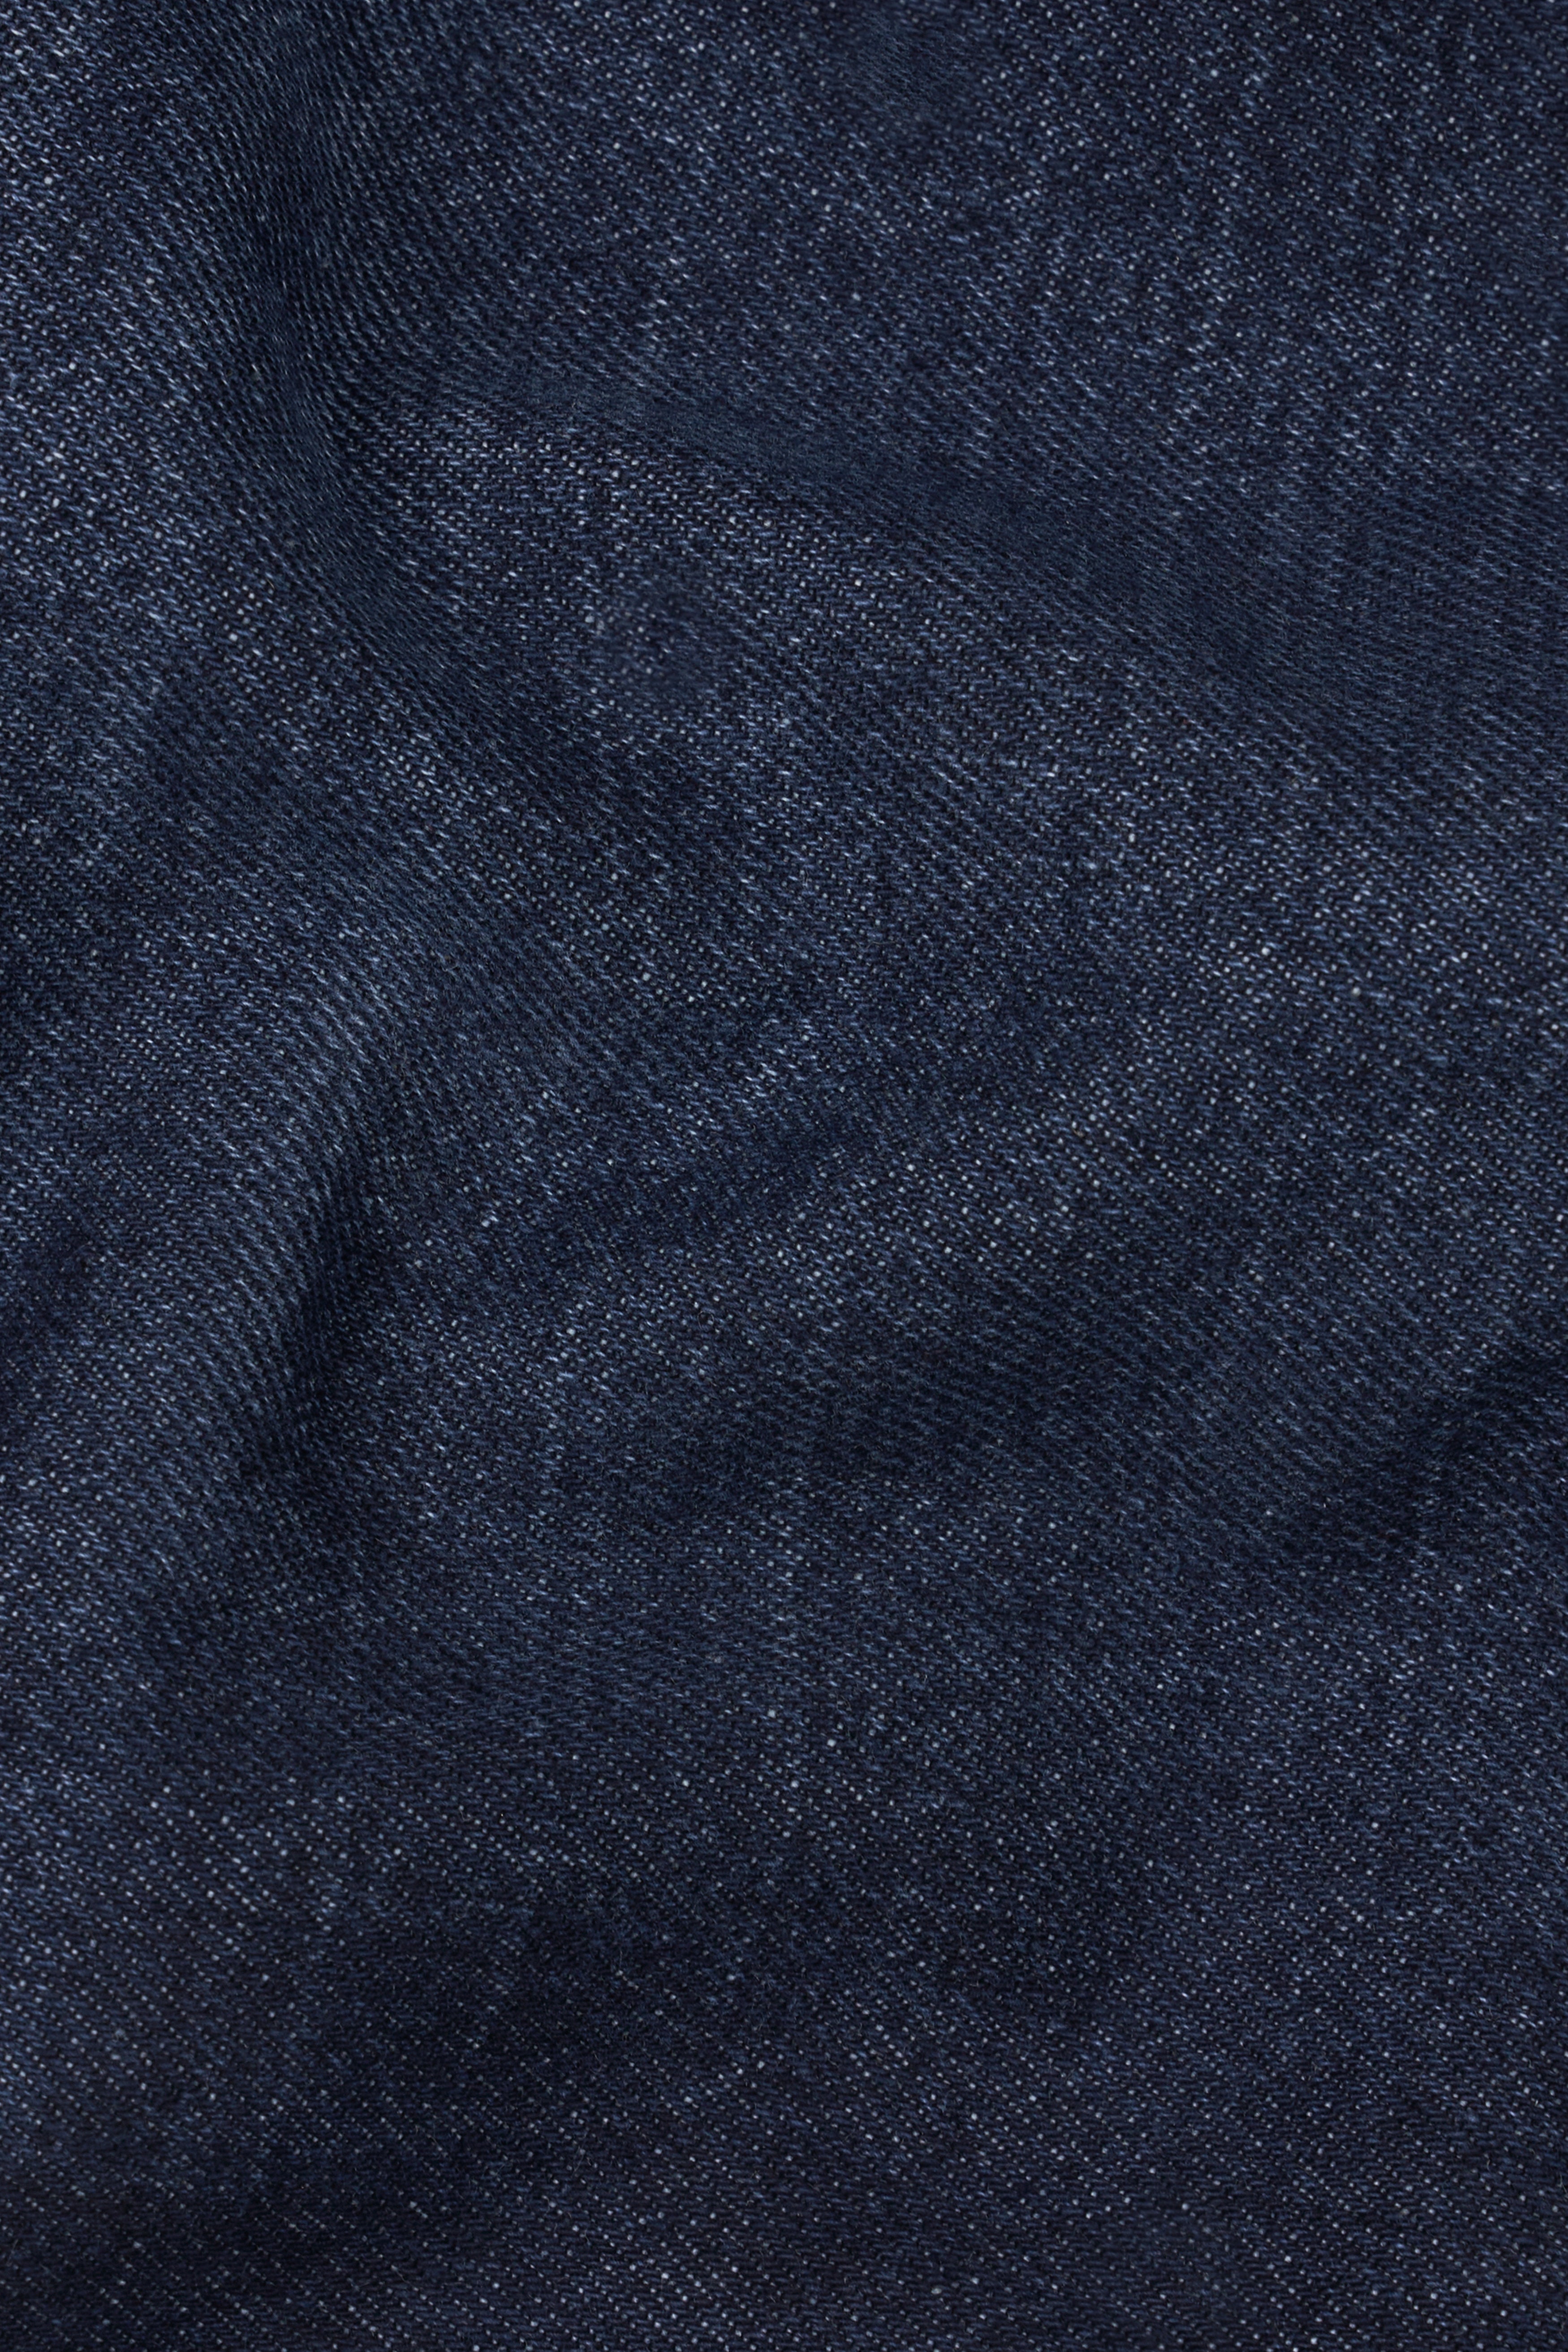 Thickened Washed Denim Fabric Pure Cotton Coat Pants Shirt Apron Garment  Sewing Brocade Dress Diy Blue